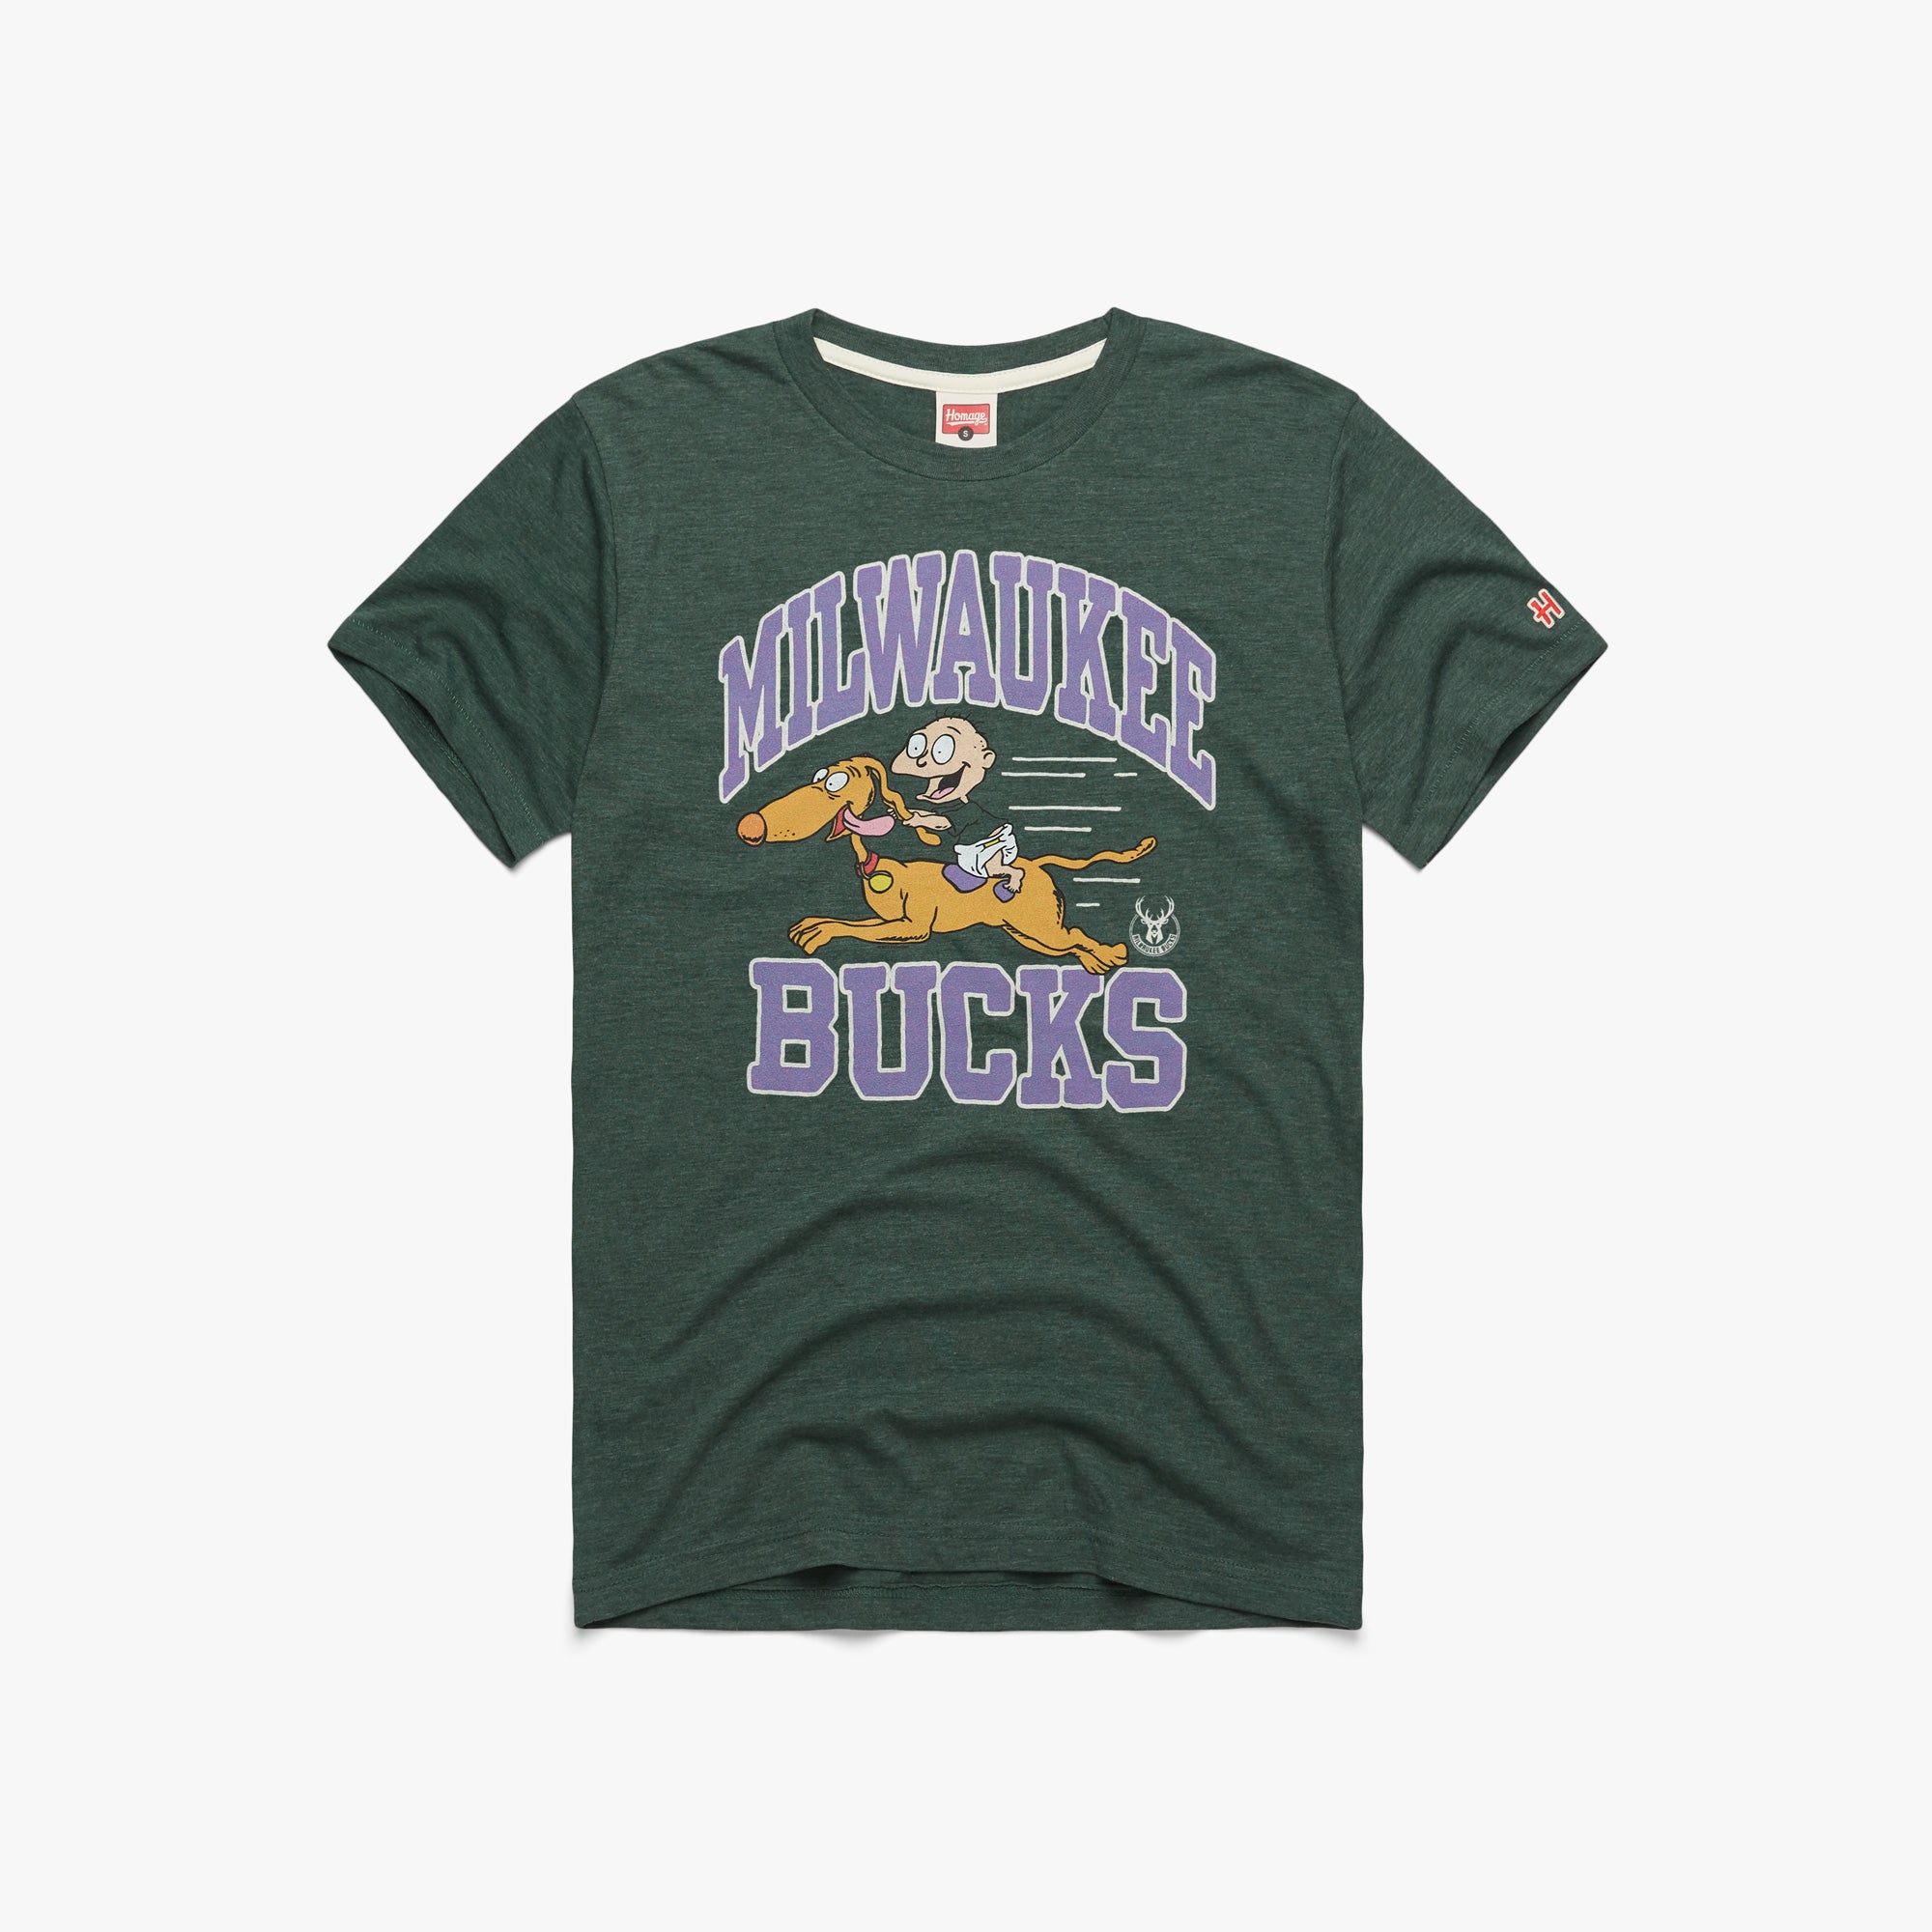 Vintage Milwaukee Bucks Hoodie Mens XL Green Sweatshirt NBA Basketball Team  Logo